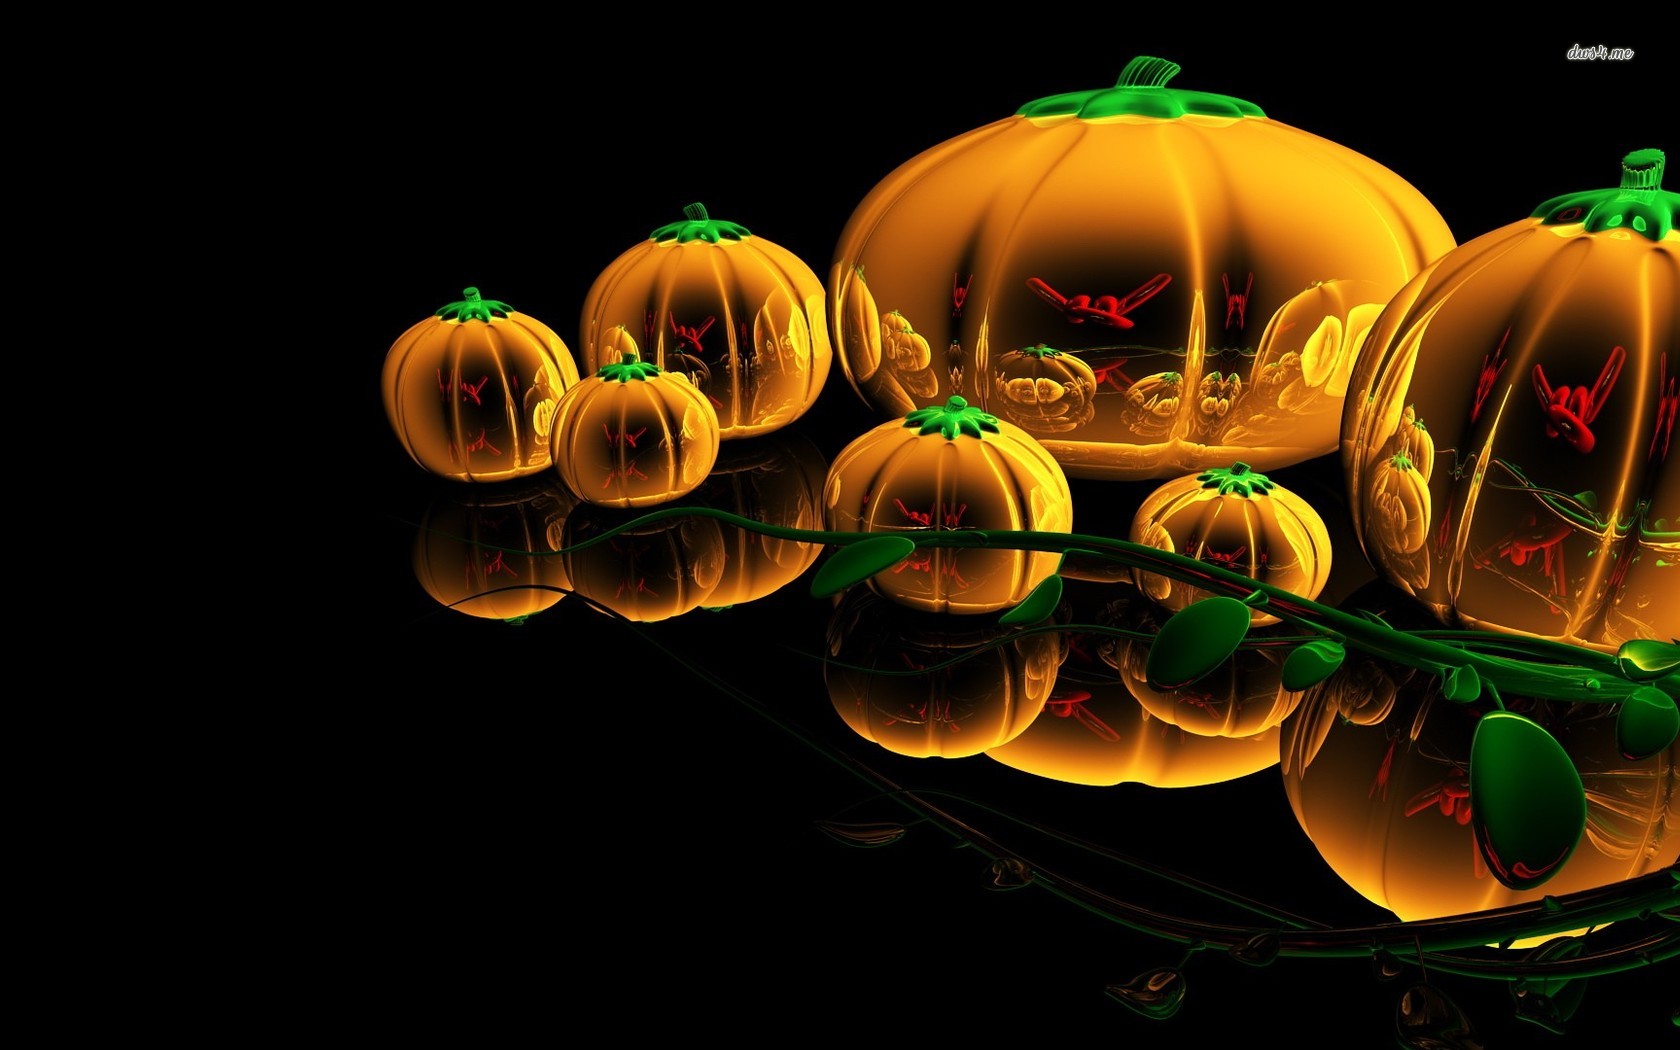 Wallpaper Halloween Pumpkin Desktop